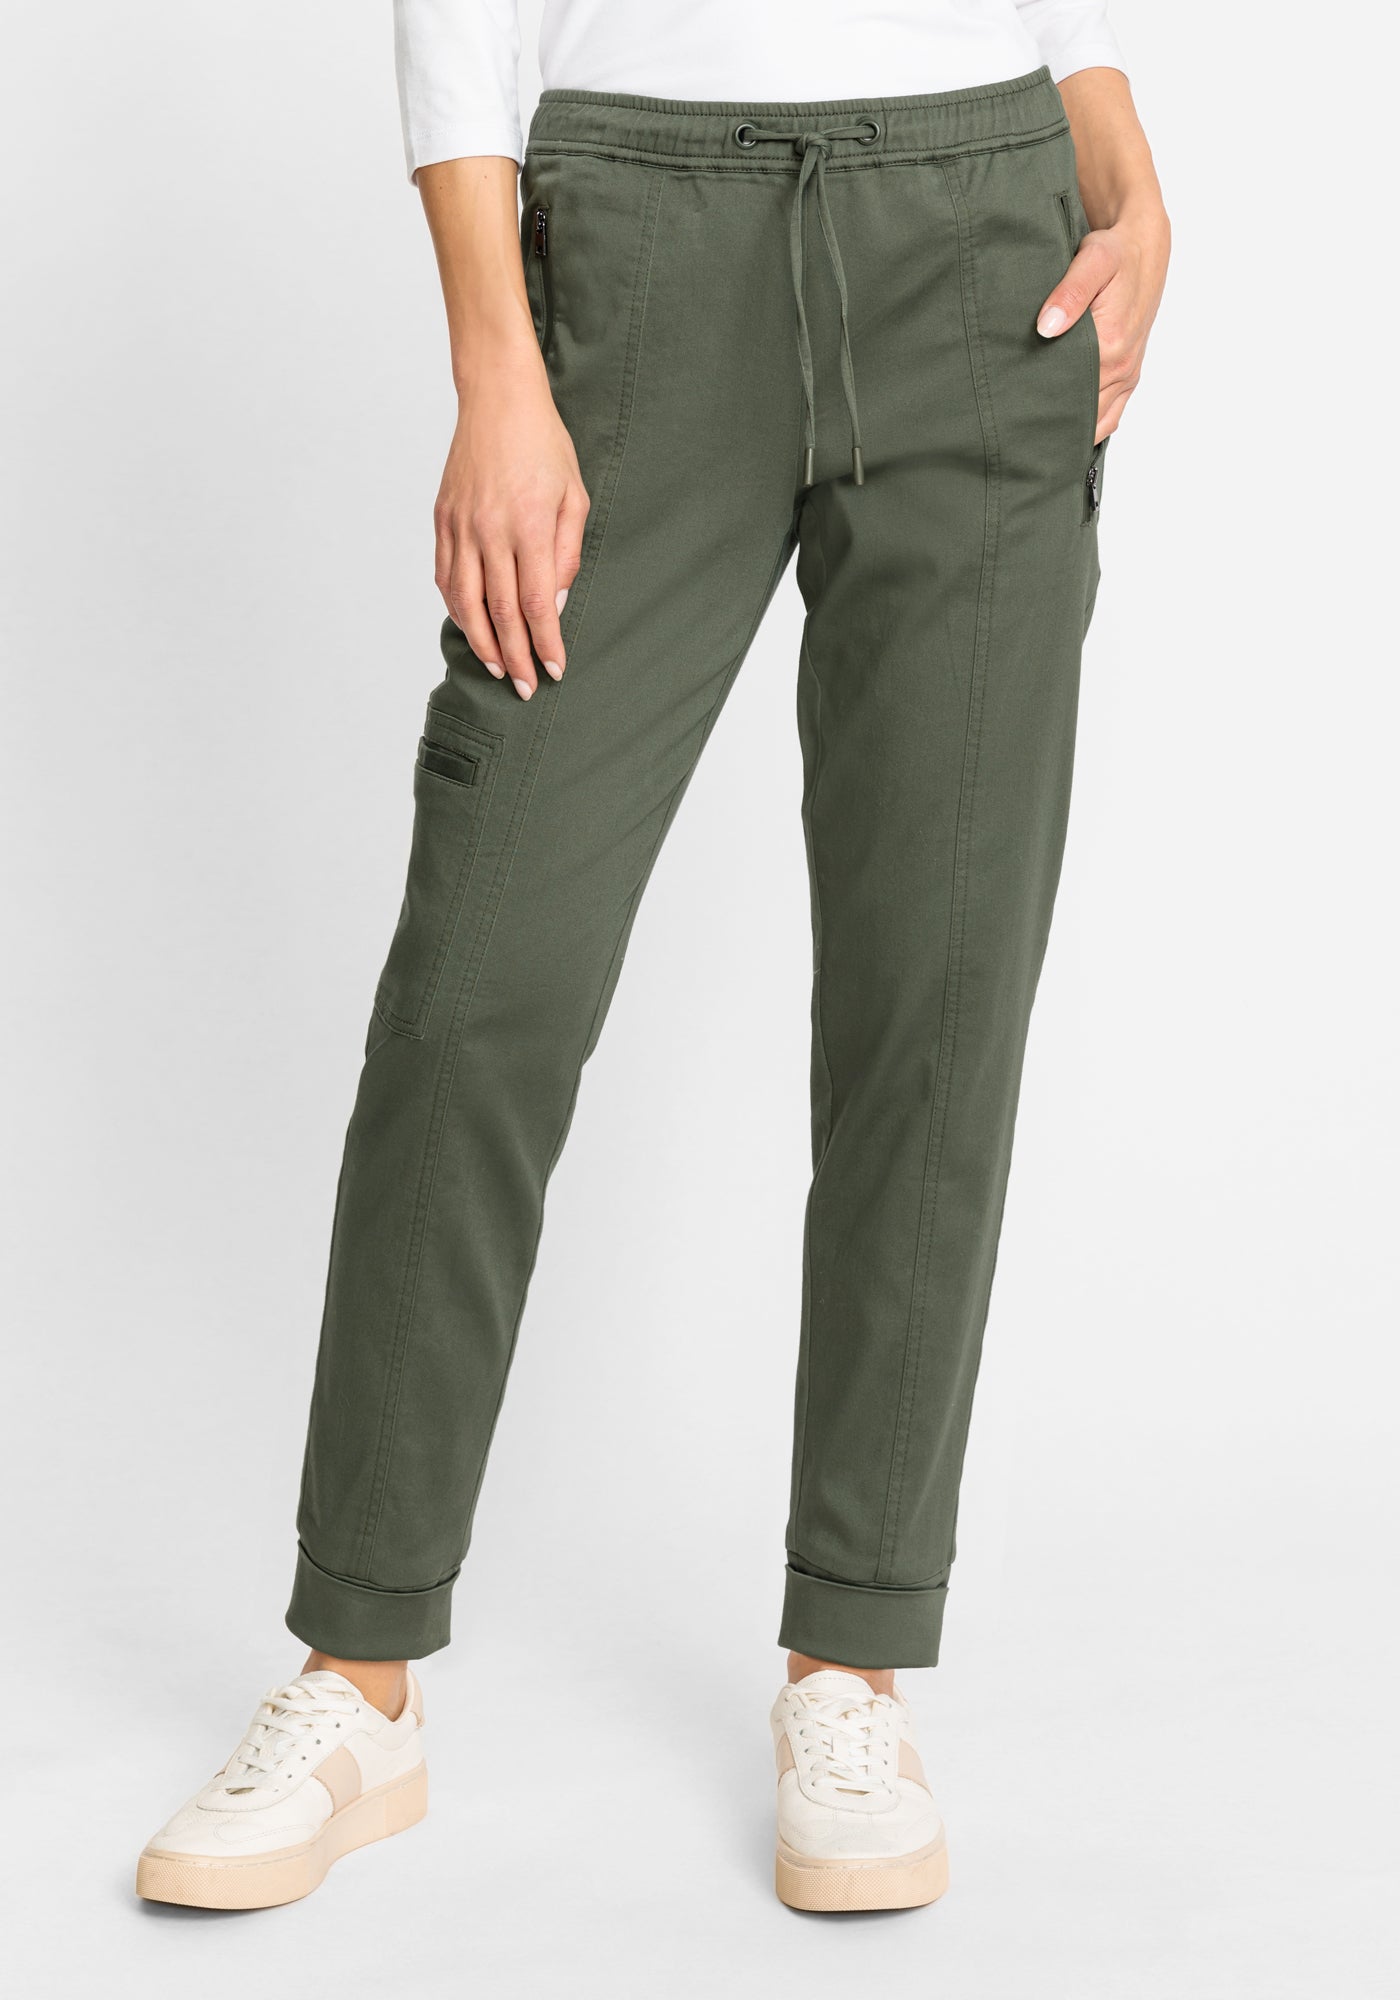 Olsen - Olive Cargo Pants